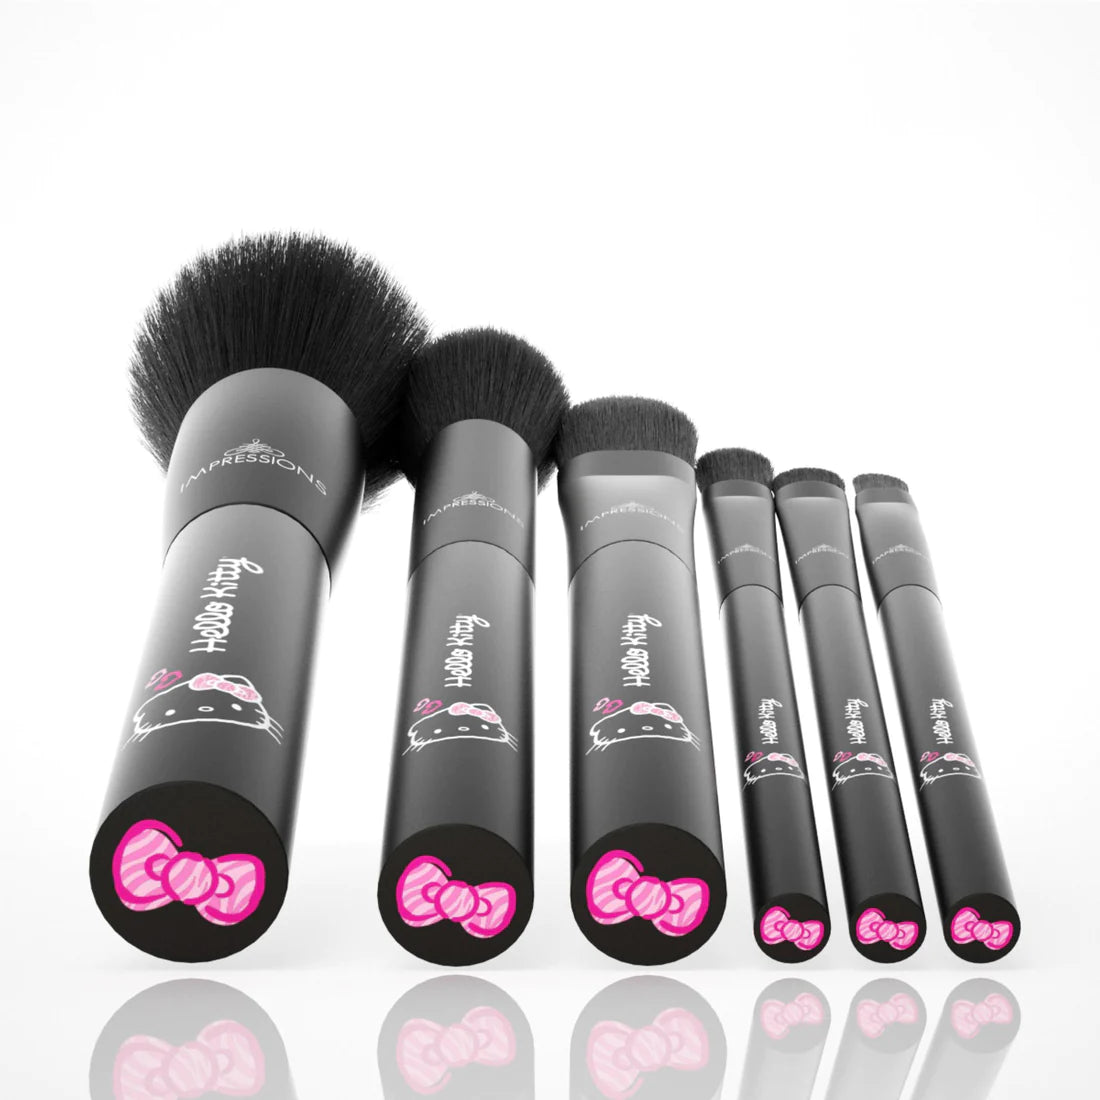 Impressions Vanity - Hello Kitty Just Slay 6pc Brush Set